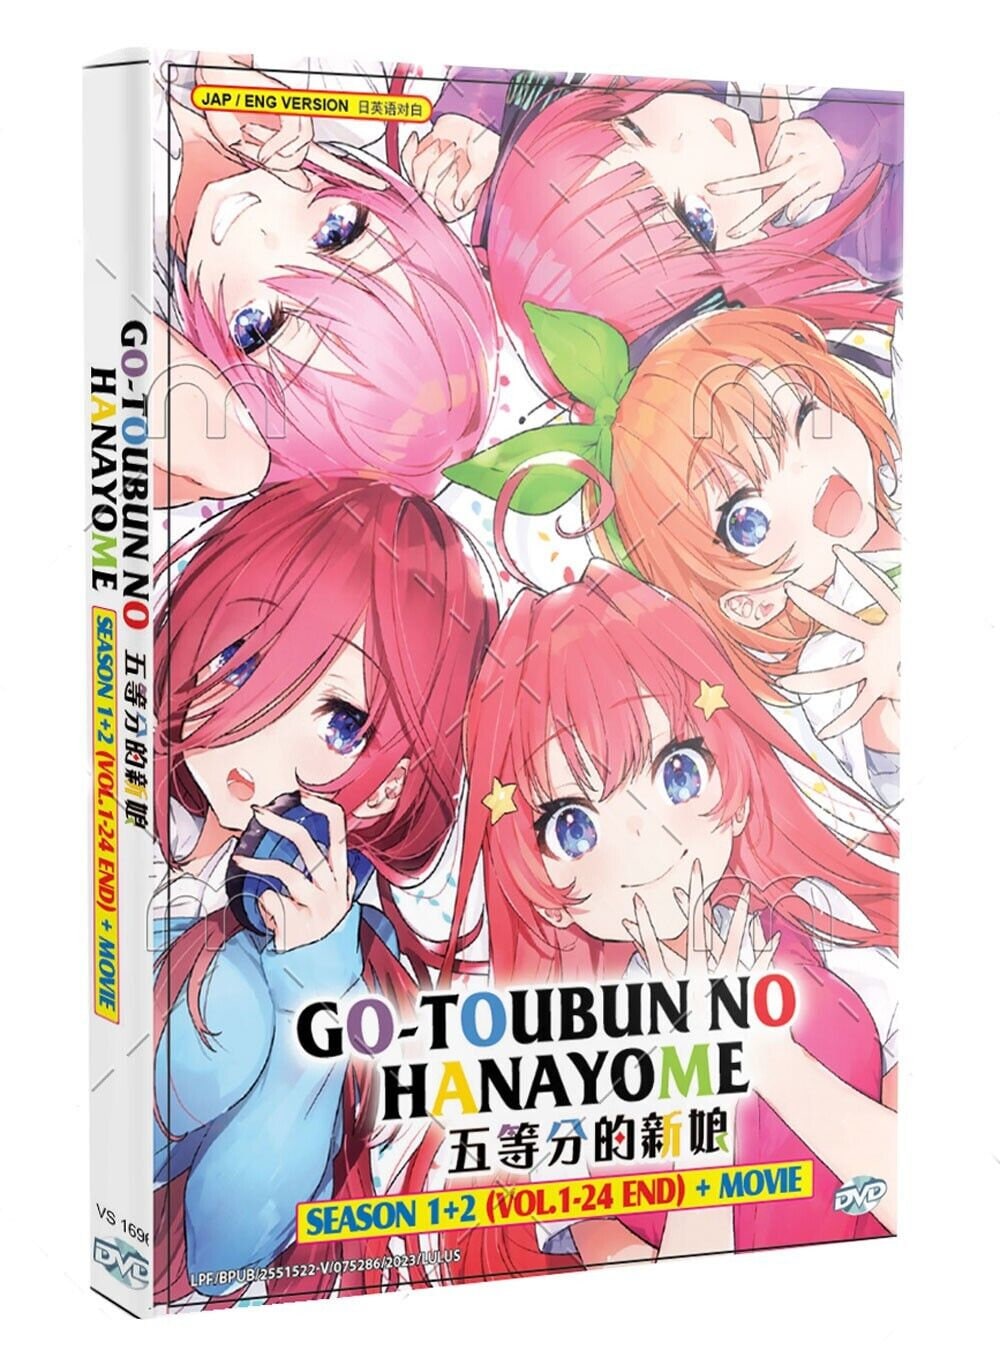 DVD Anime Gotoubun No Hanayome Season 2 Vol.1-12 End English